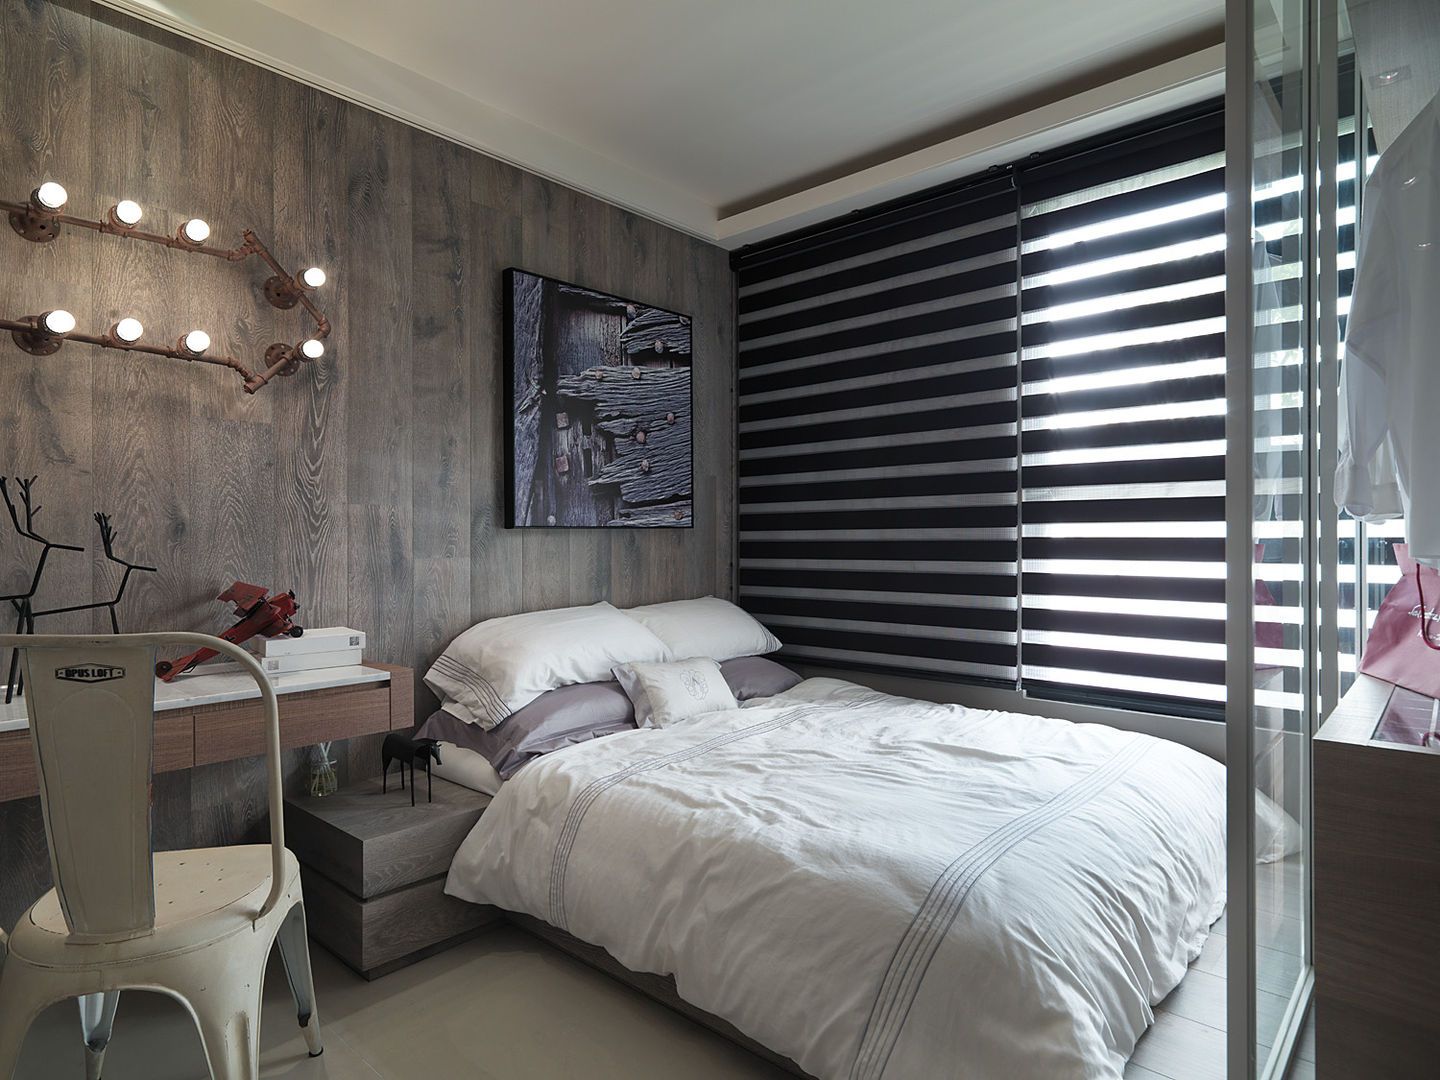 [HOME] Ciid Design - Haihua Model House, KD Panels KD Panels Kamar Tidur Gaya Rustic Kayu Wood effect